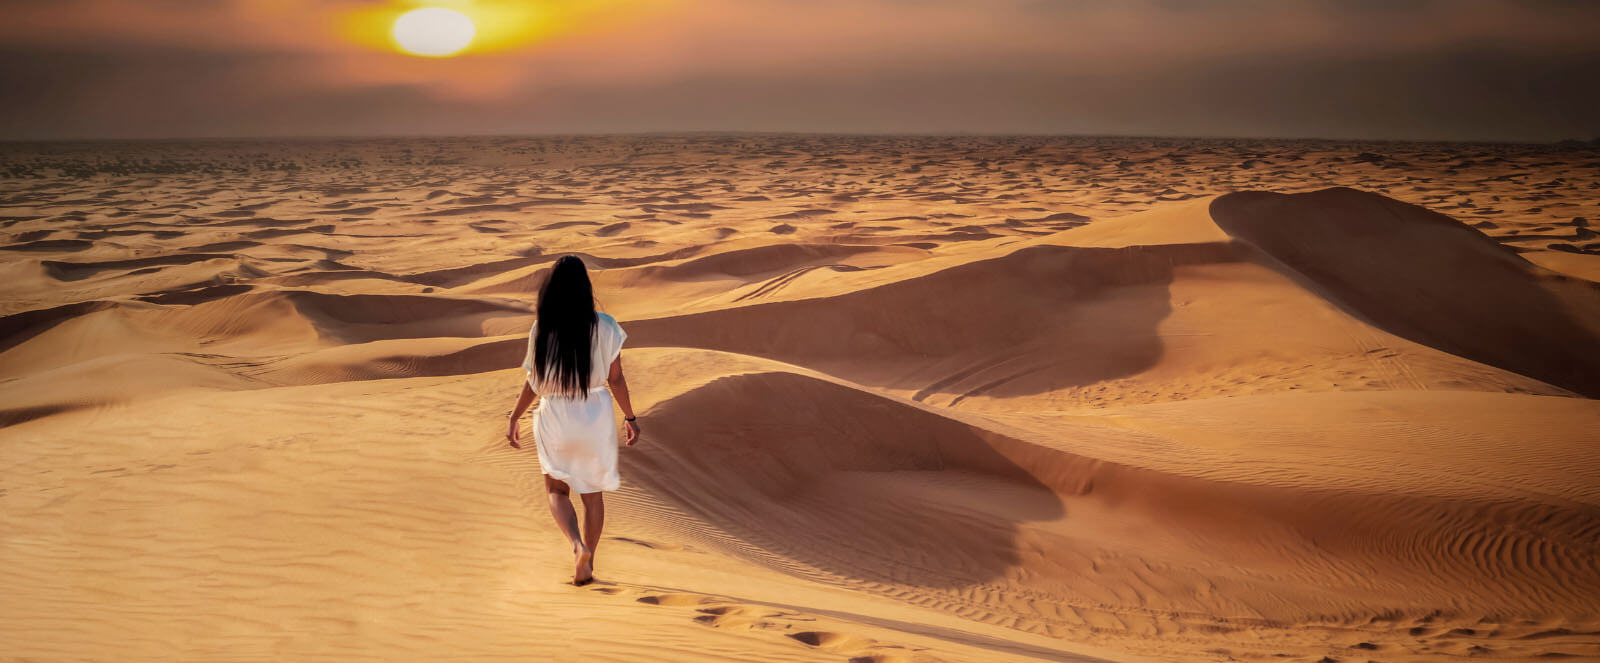 sunset-desert-safari-adventure-in-dubai-desert